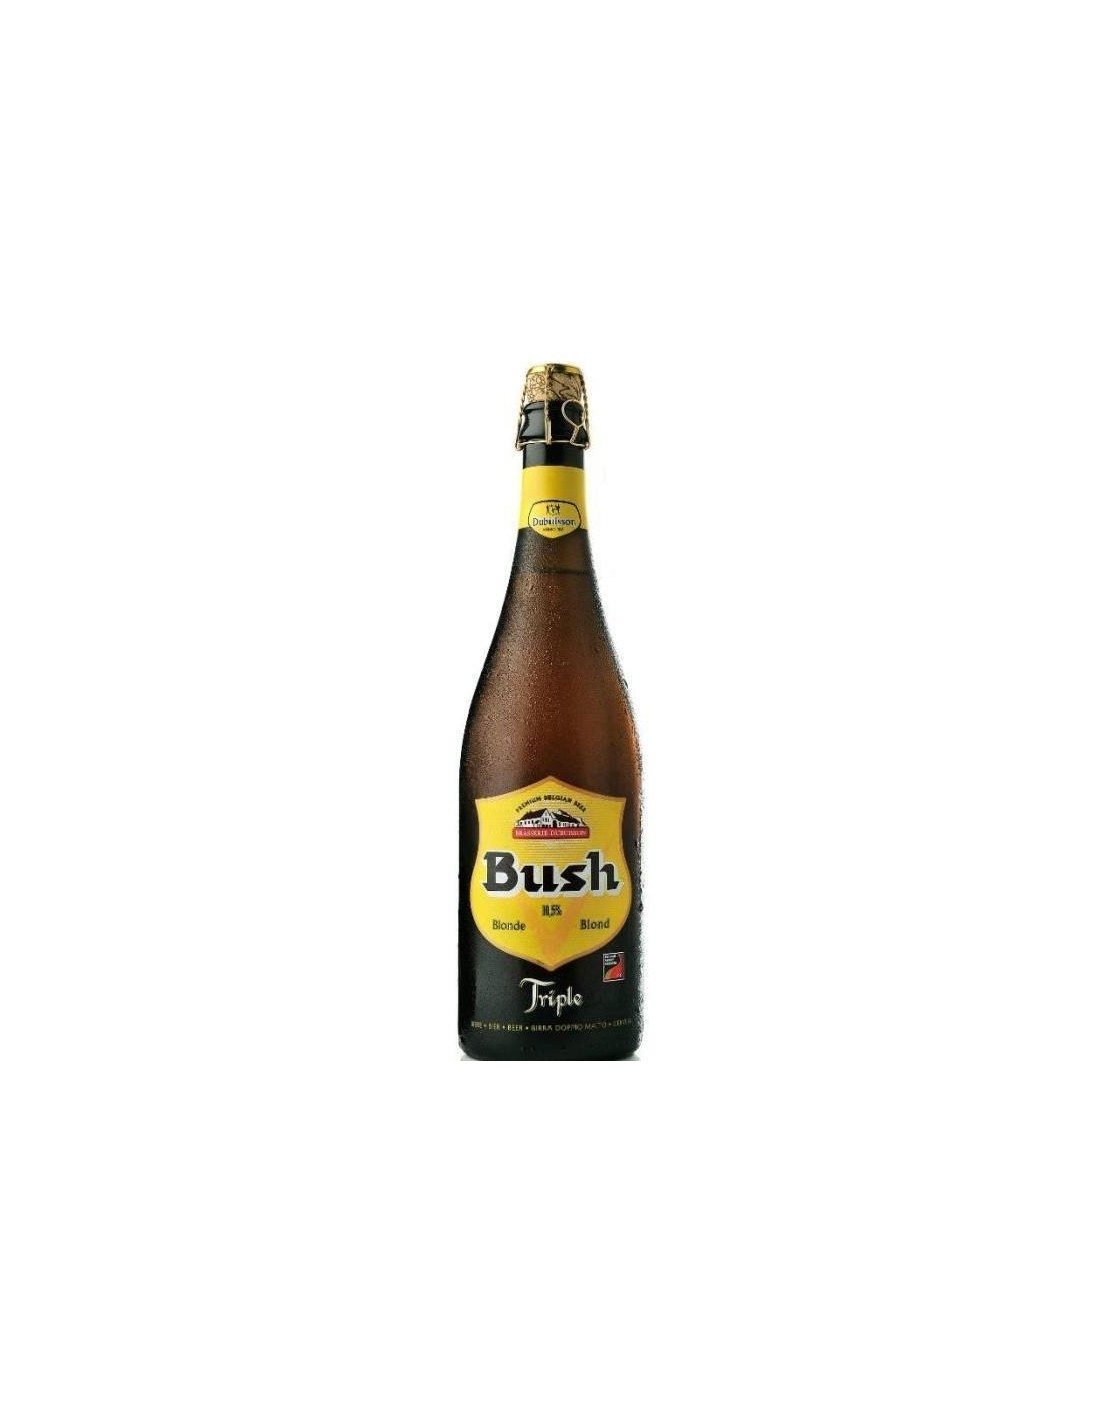 Bere blonda, filtrata Bush, 10.5% alc., 0.75L, Belgia alcooldiscount.ro